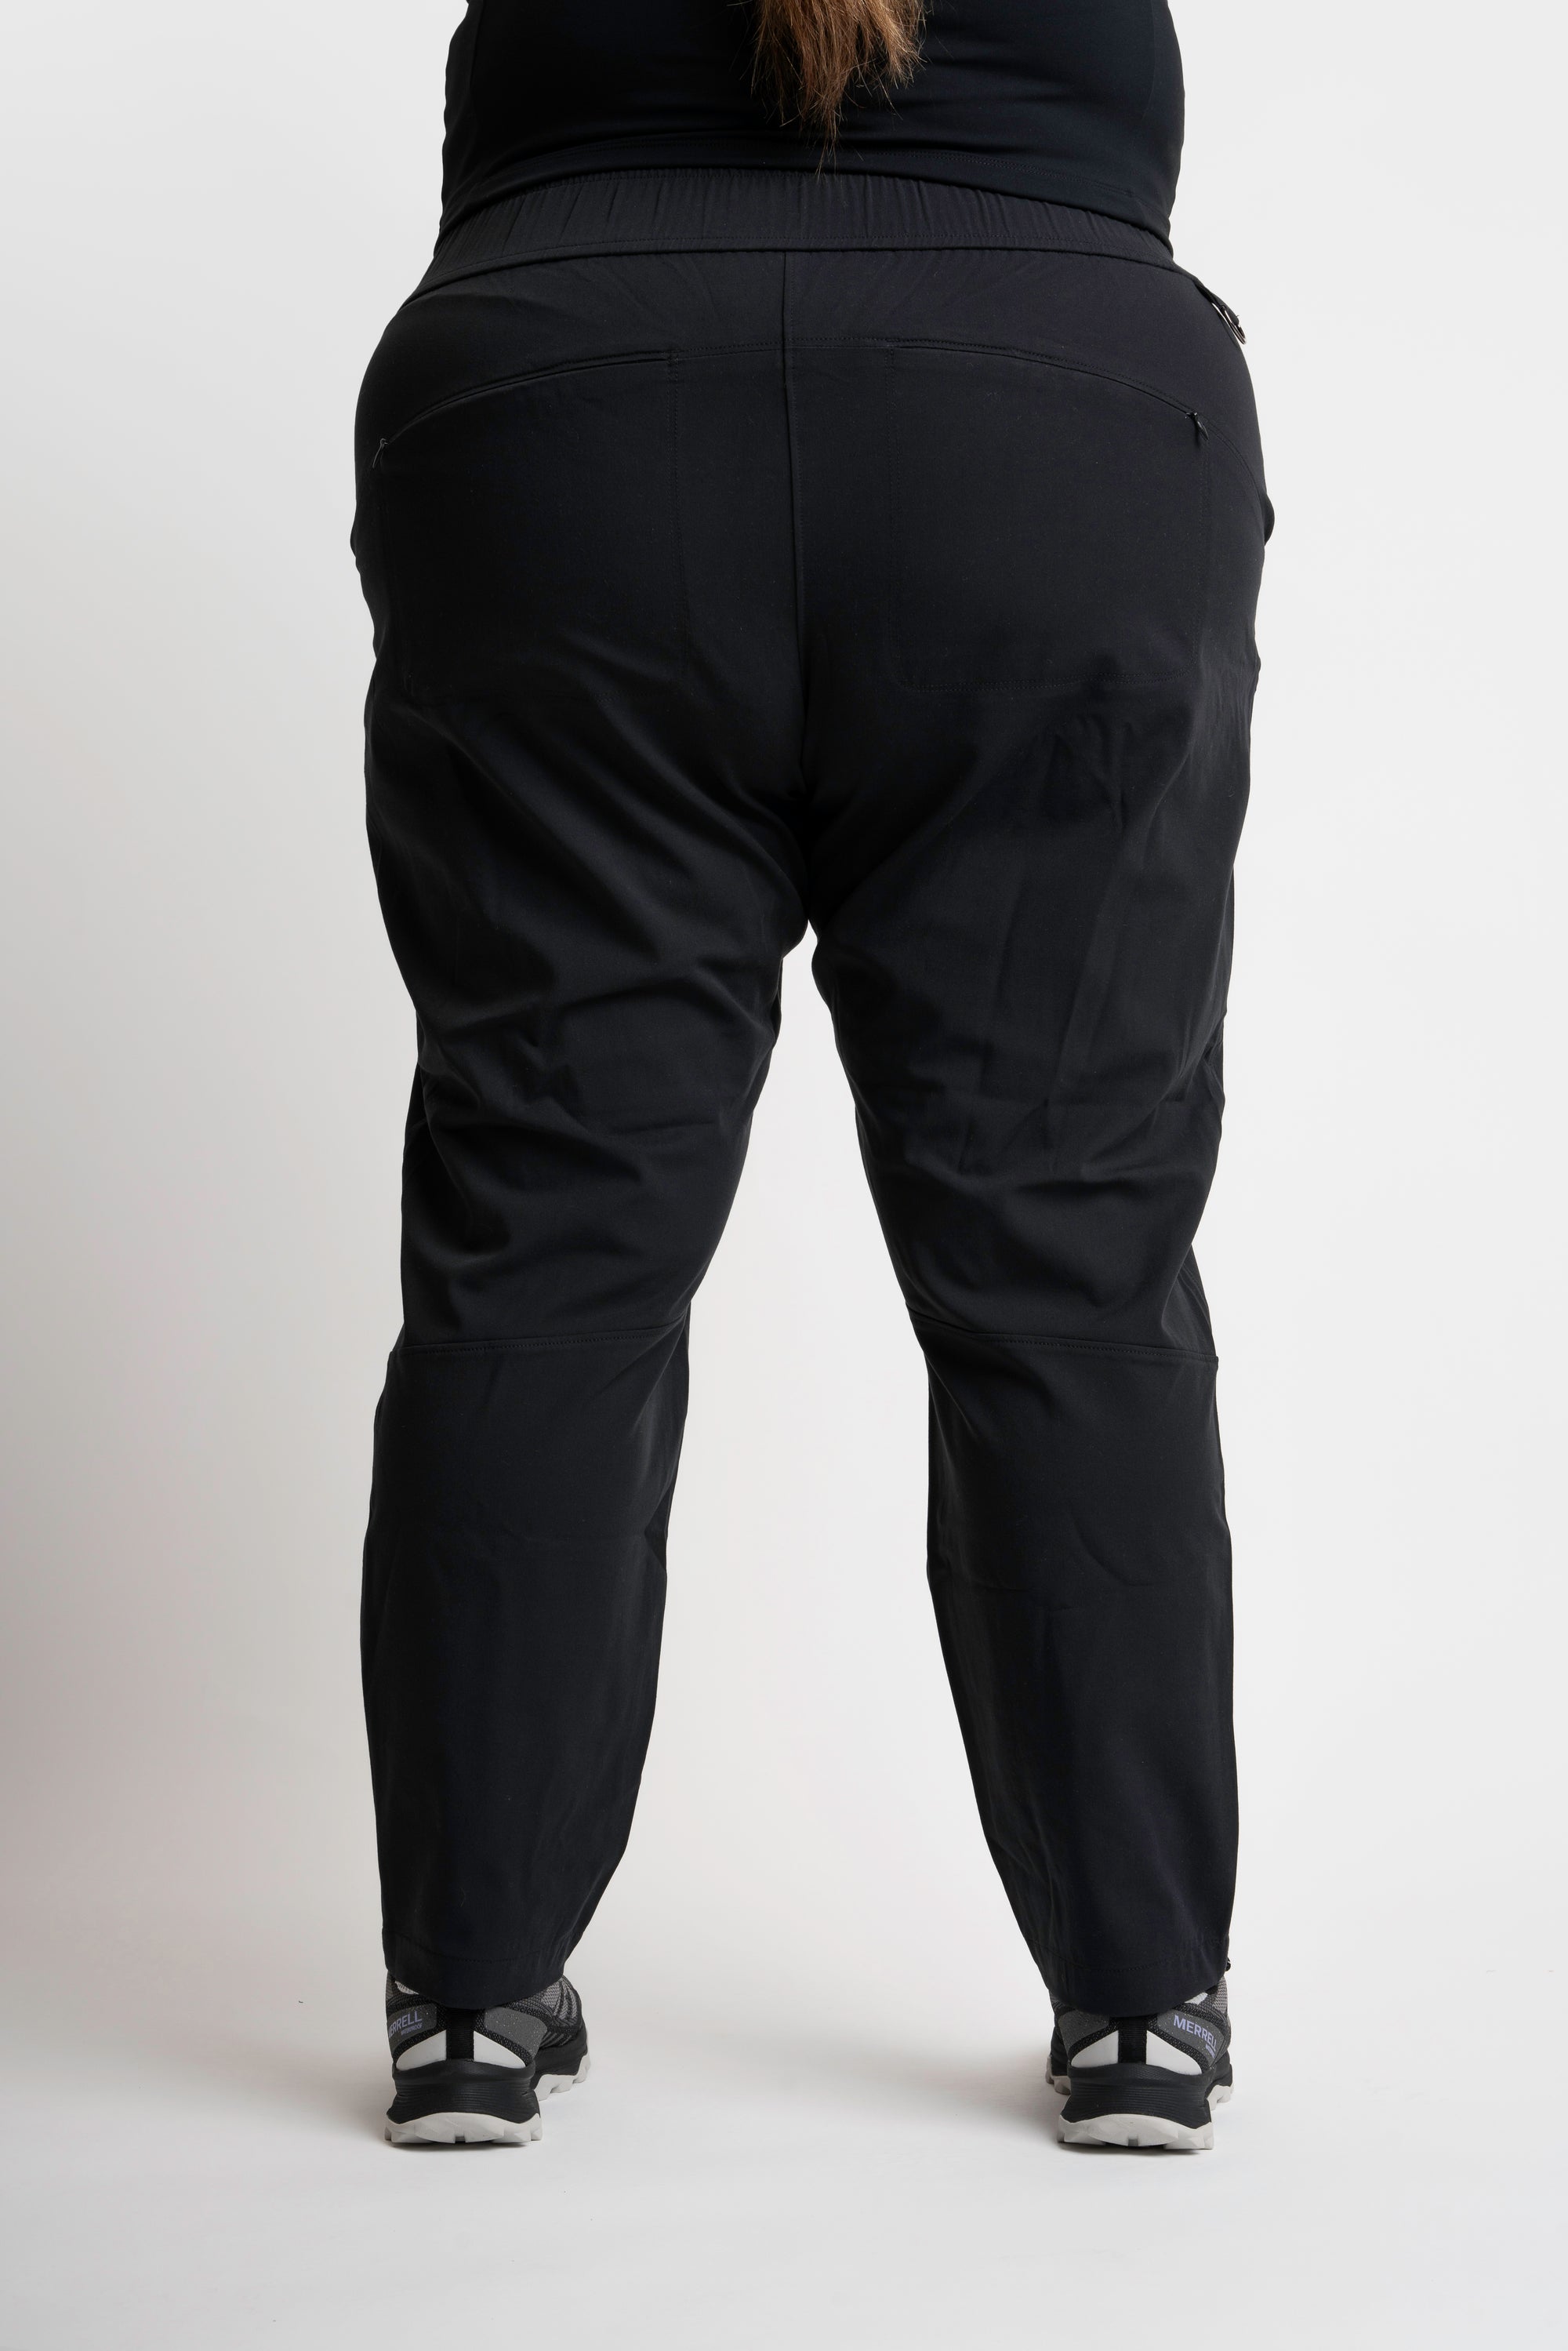  Black Soot Athleisure Knit Capri Pants - X-Small